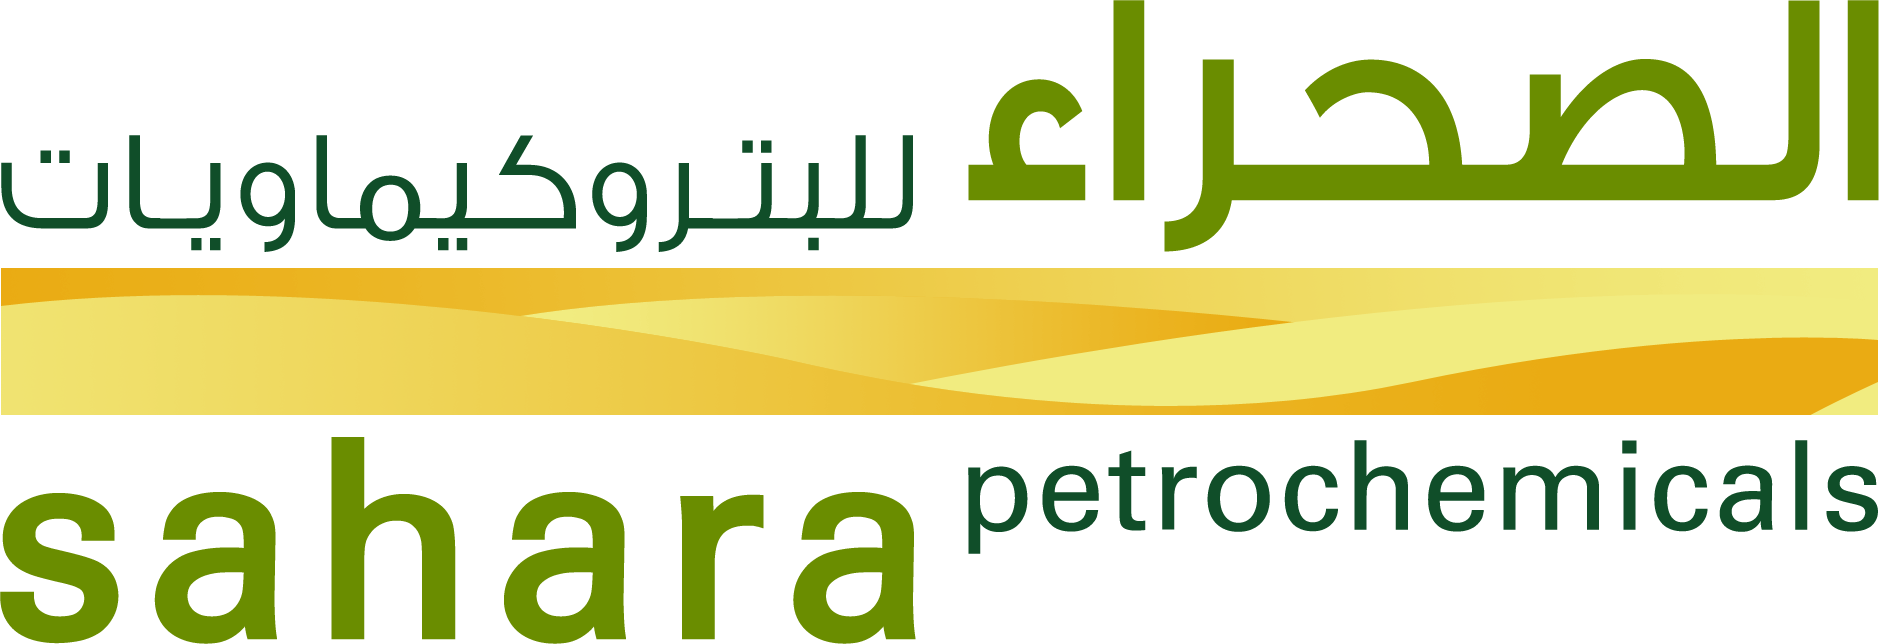 Petrochemical Company Logo - Sahara Petrochemicals Company